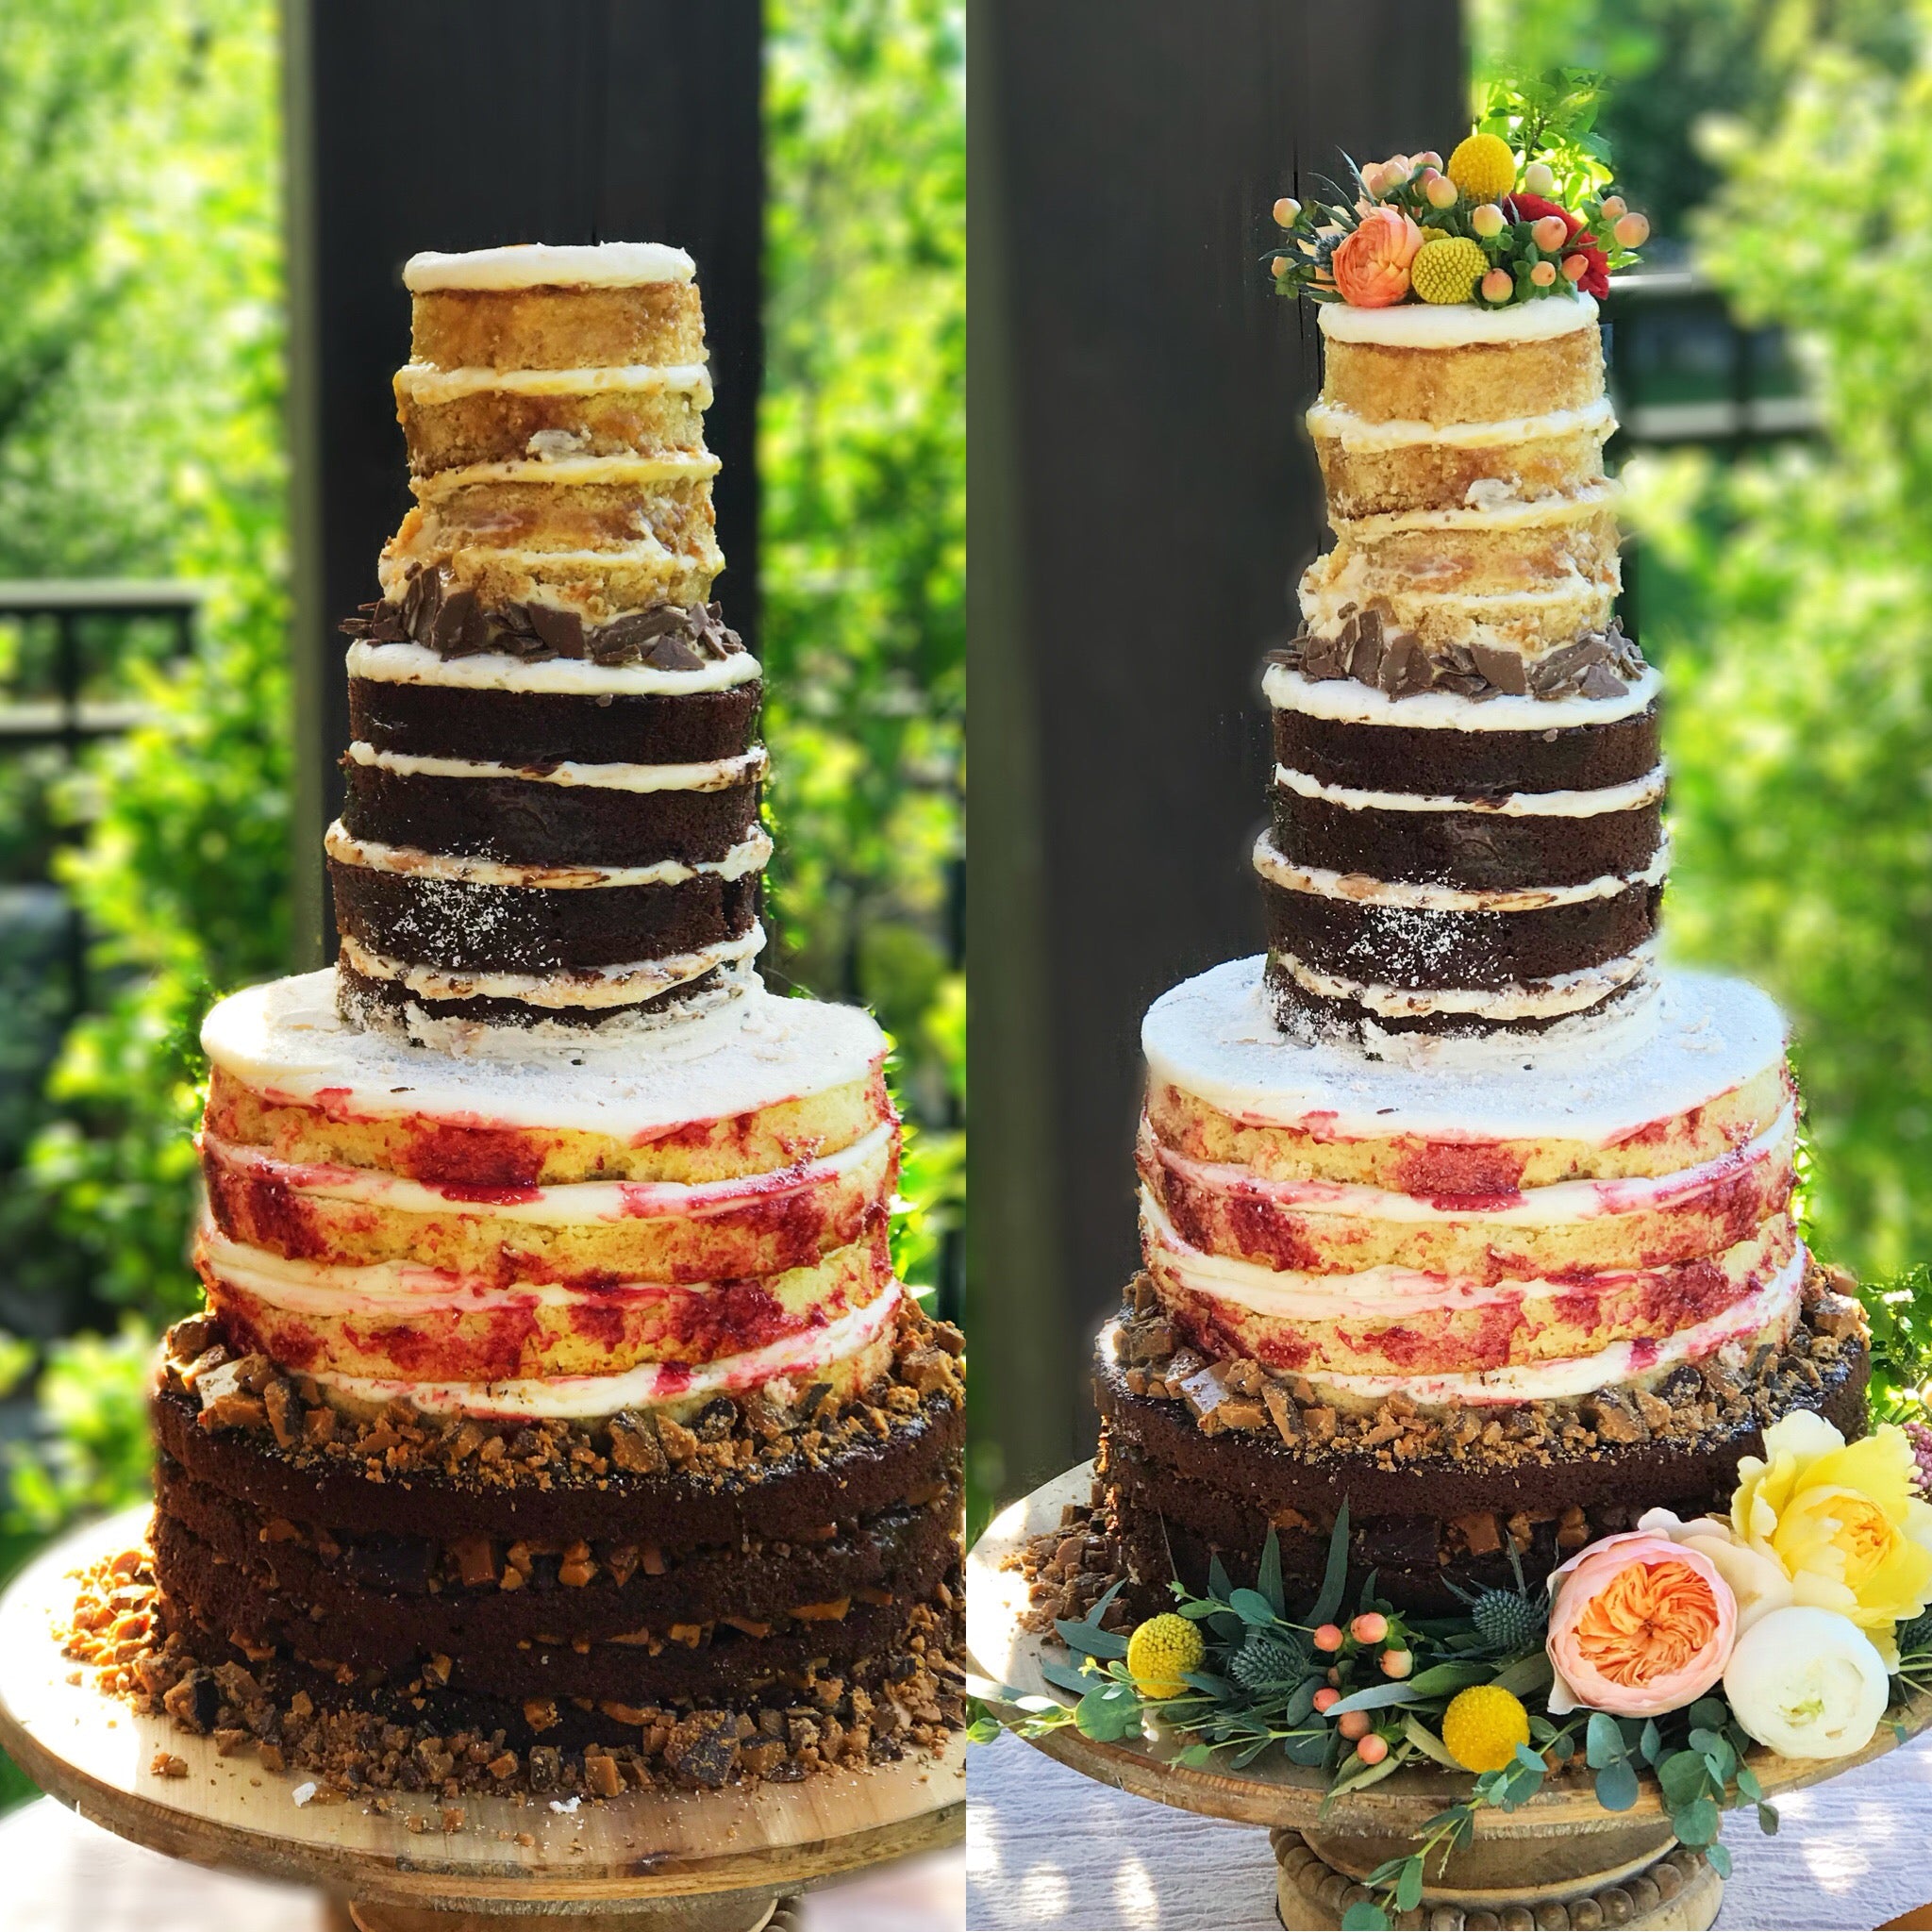 Top 7 Wedding Cake Flavors